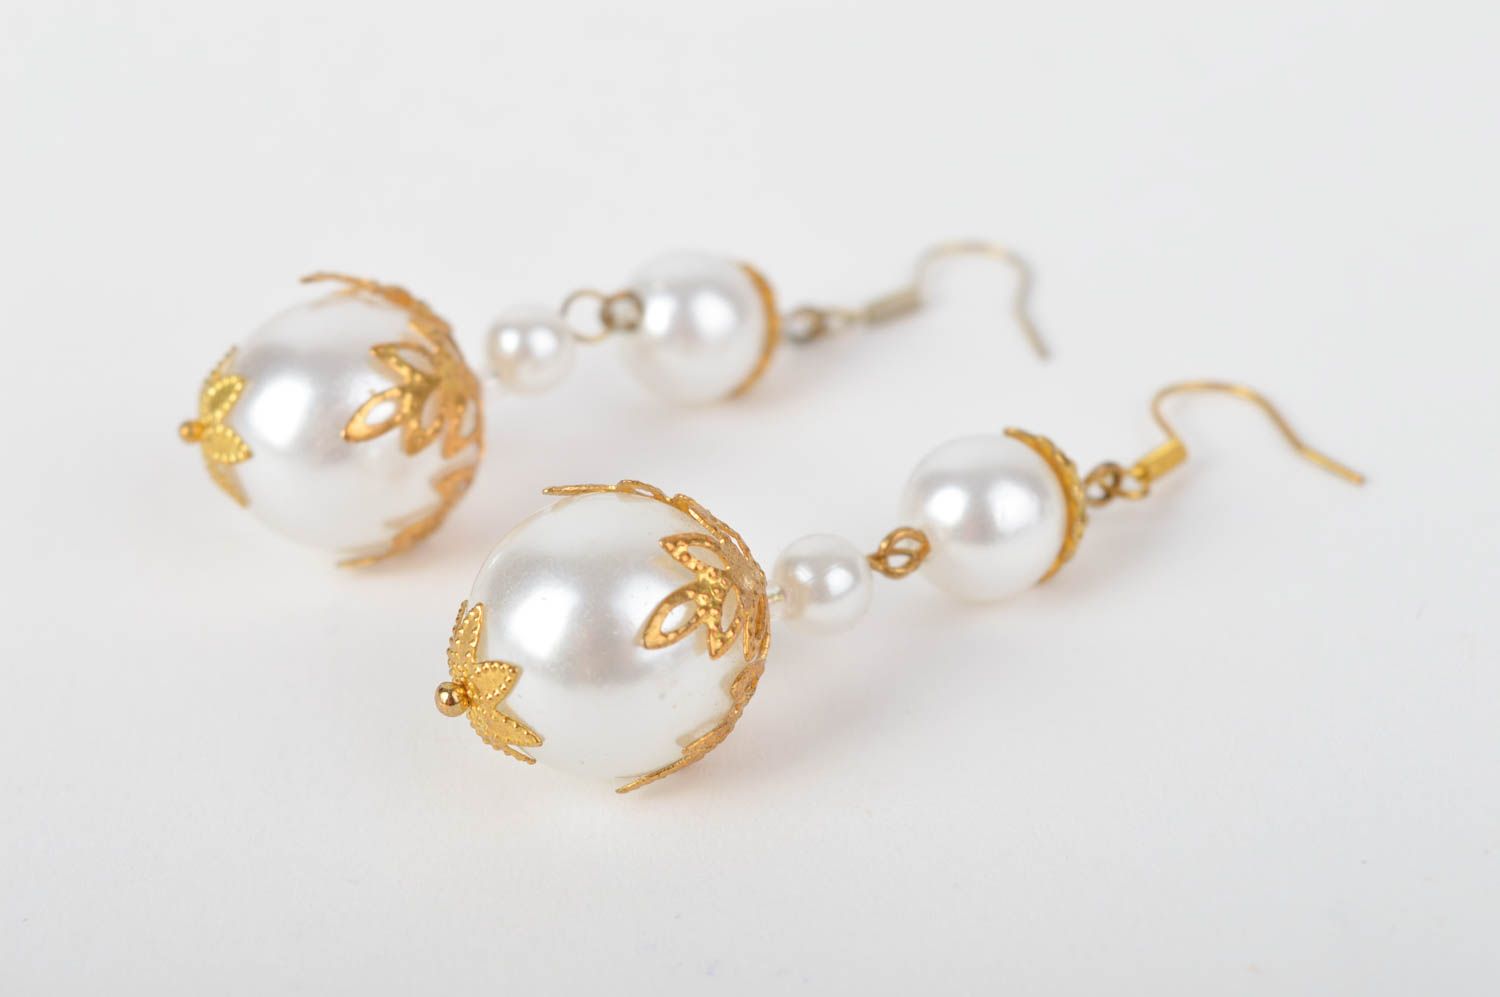 Handmade earrings designer jewelry dangling earrings fashion accessories photo 3